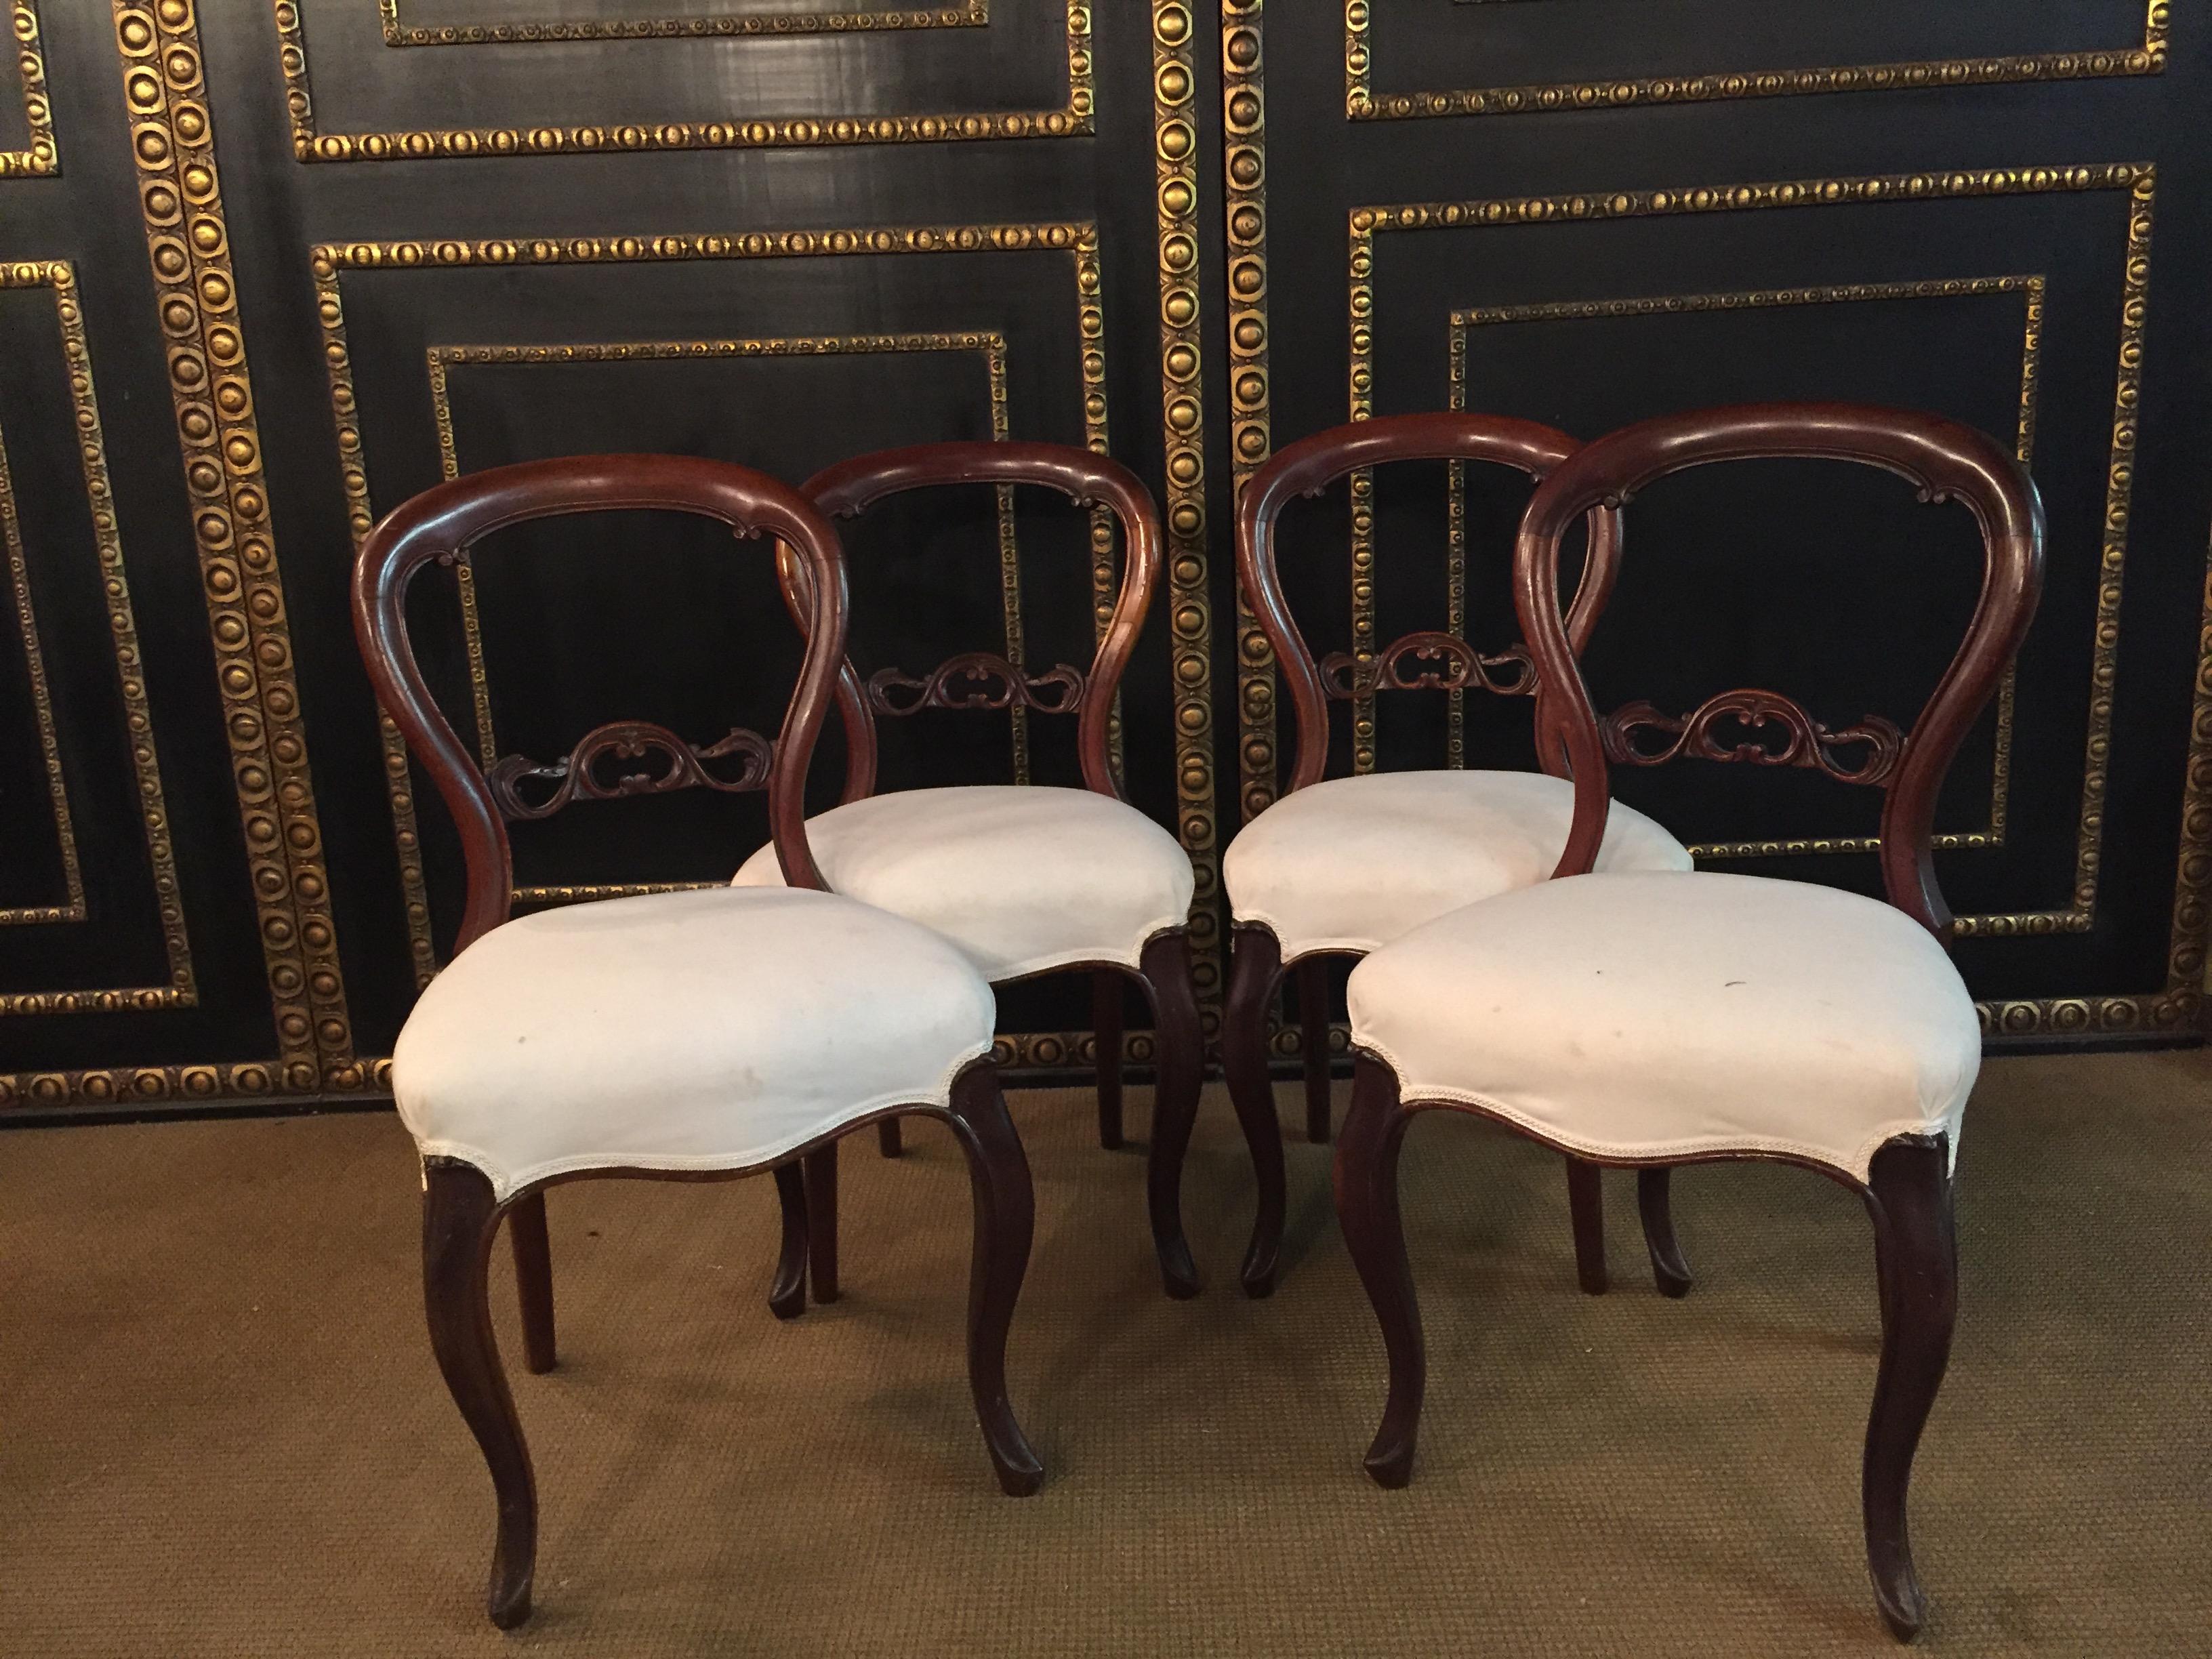 4 Biedermeier chairs
backrest medallion massive mahogany.
  
  